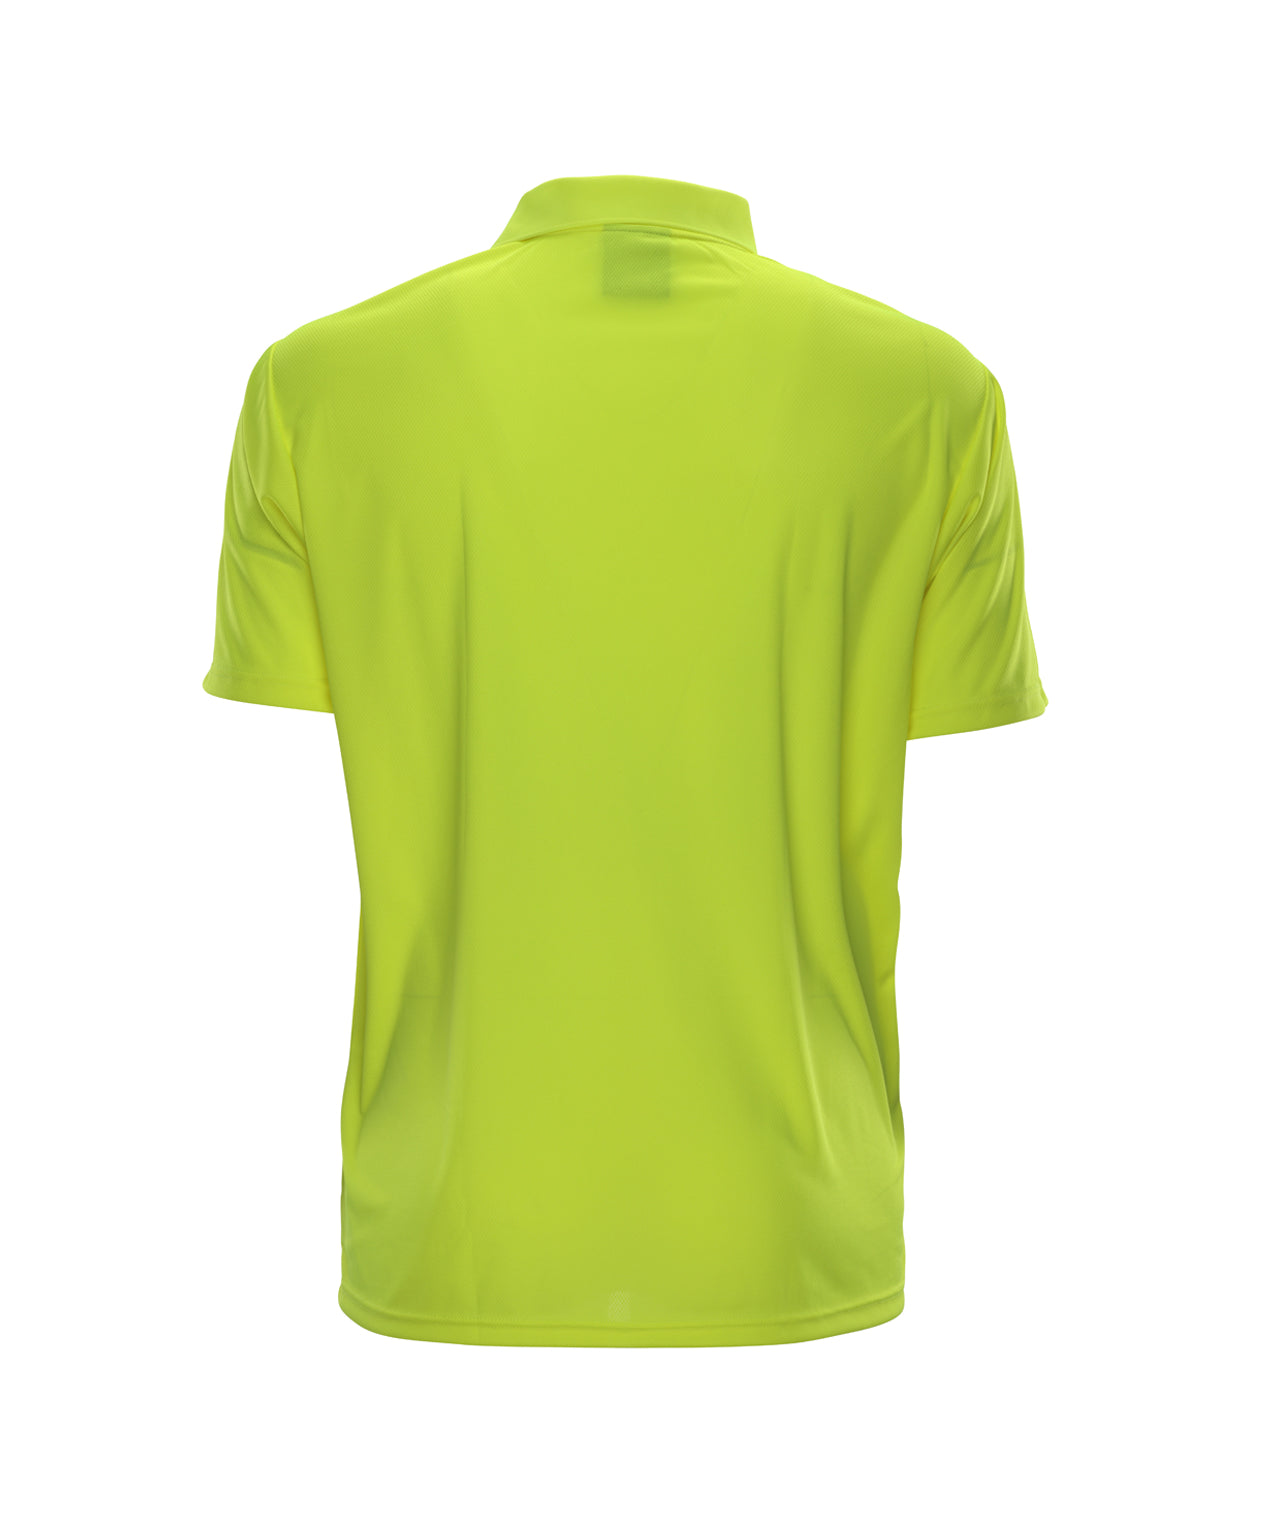 300BLM Hi-Vis Lime Birdseye Safety Polo Shirt